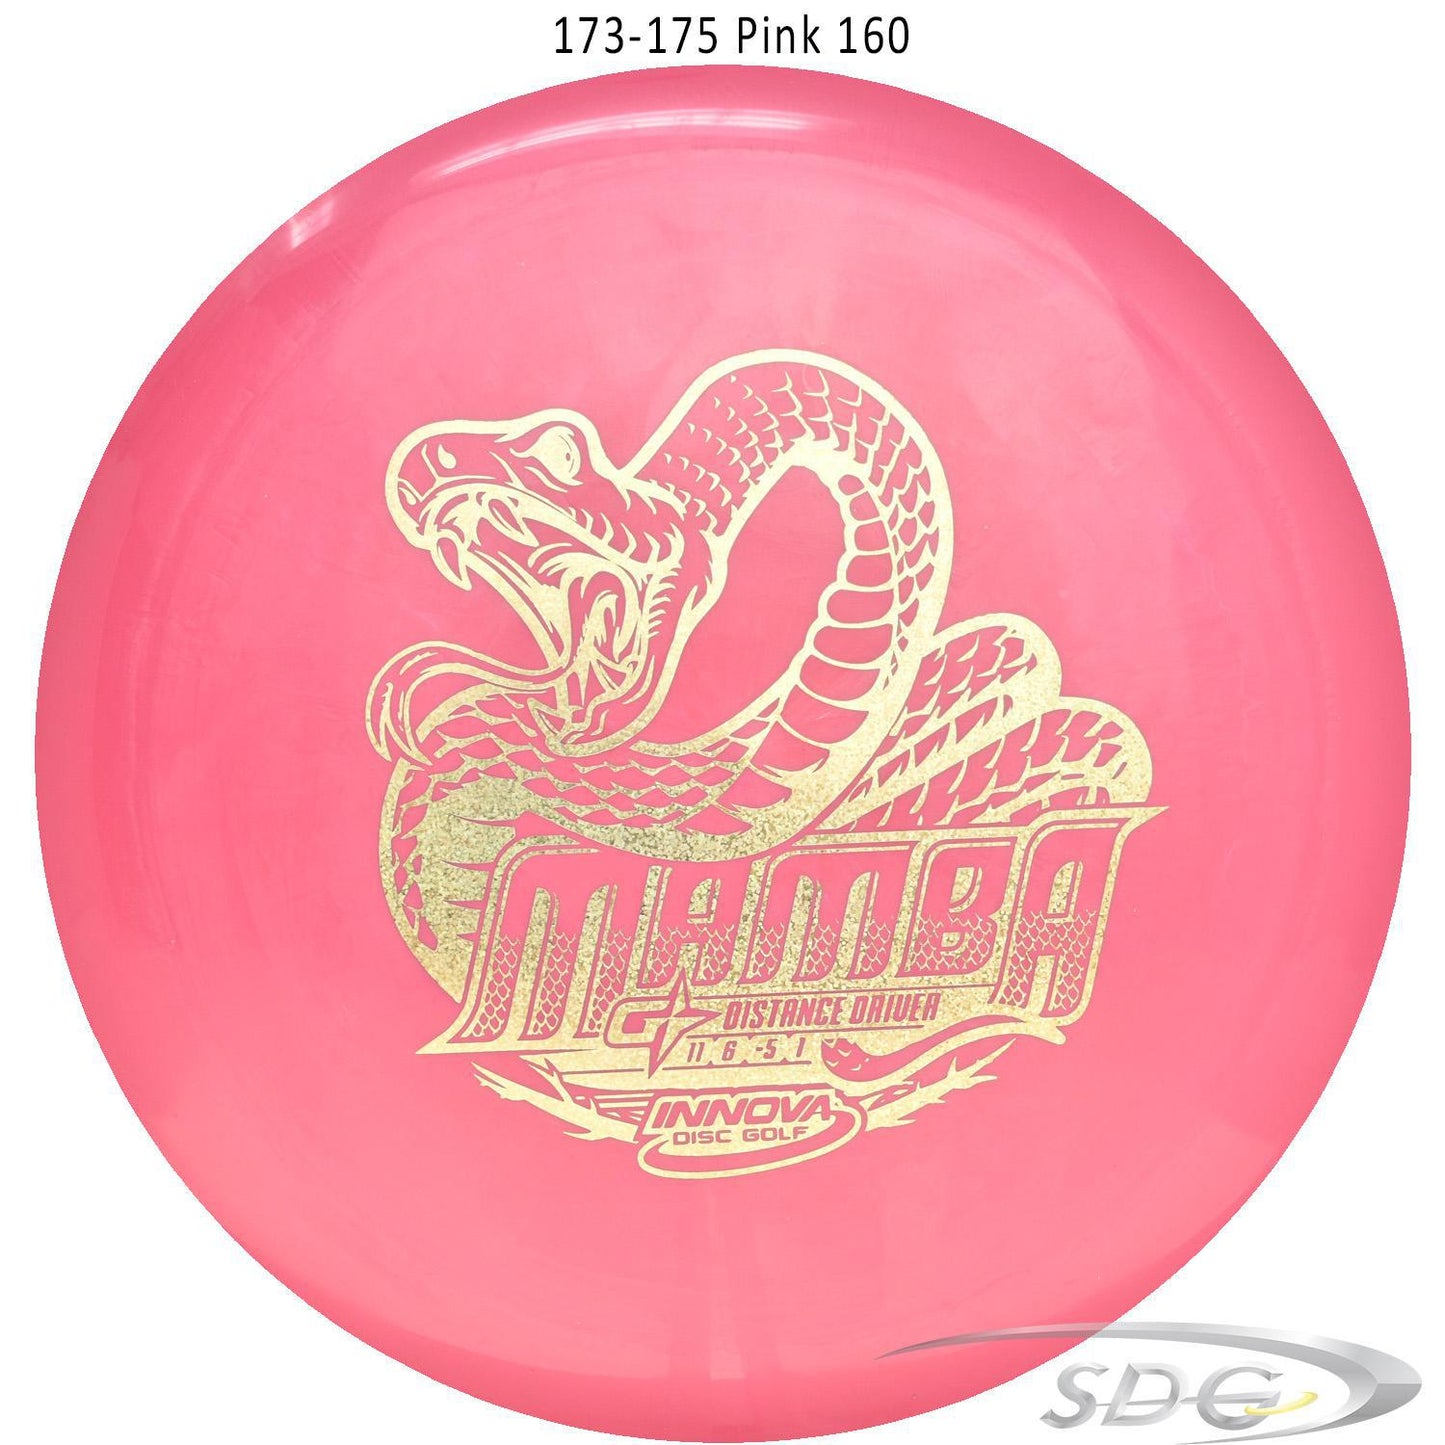 innova-gstar-mamba-disc-golf-distance-driver-175-173-weights 173-175 Pink 160 